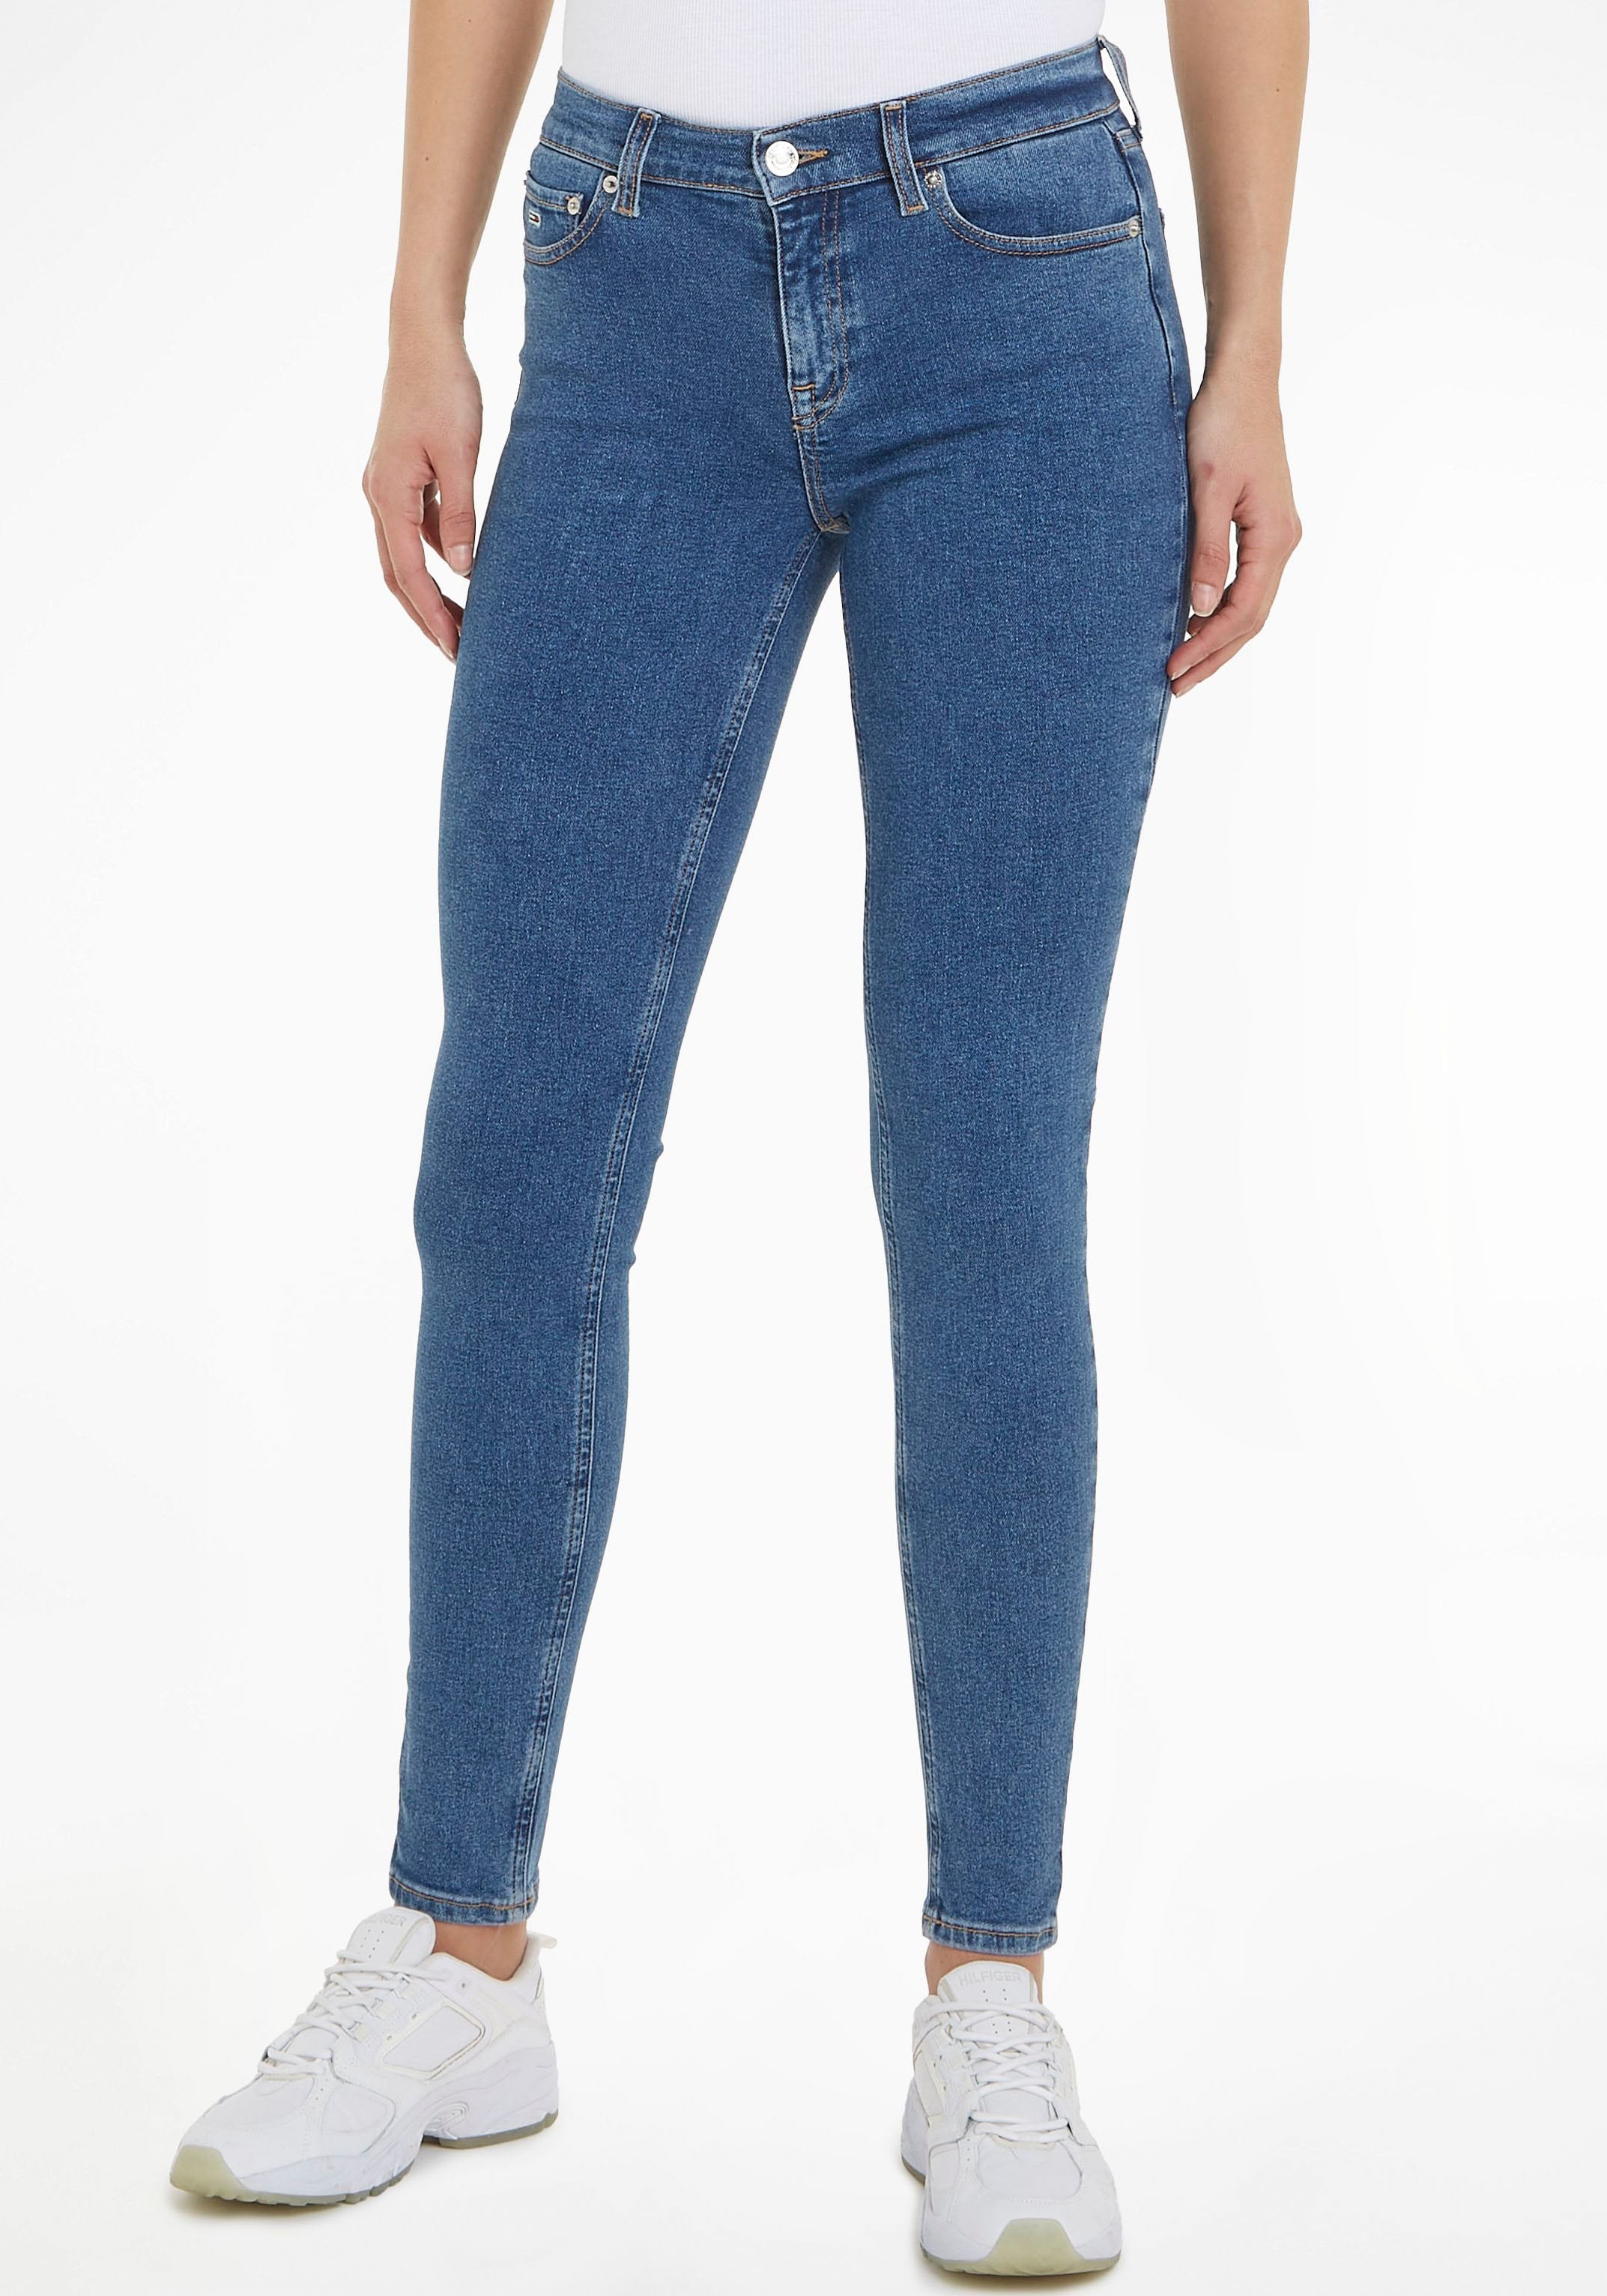 Shop Ledermarkenlabel Jeans Bequeme Jeans mit Tommy im »Nora«, OTTO Online